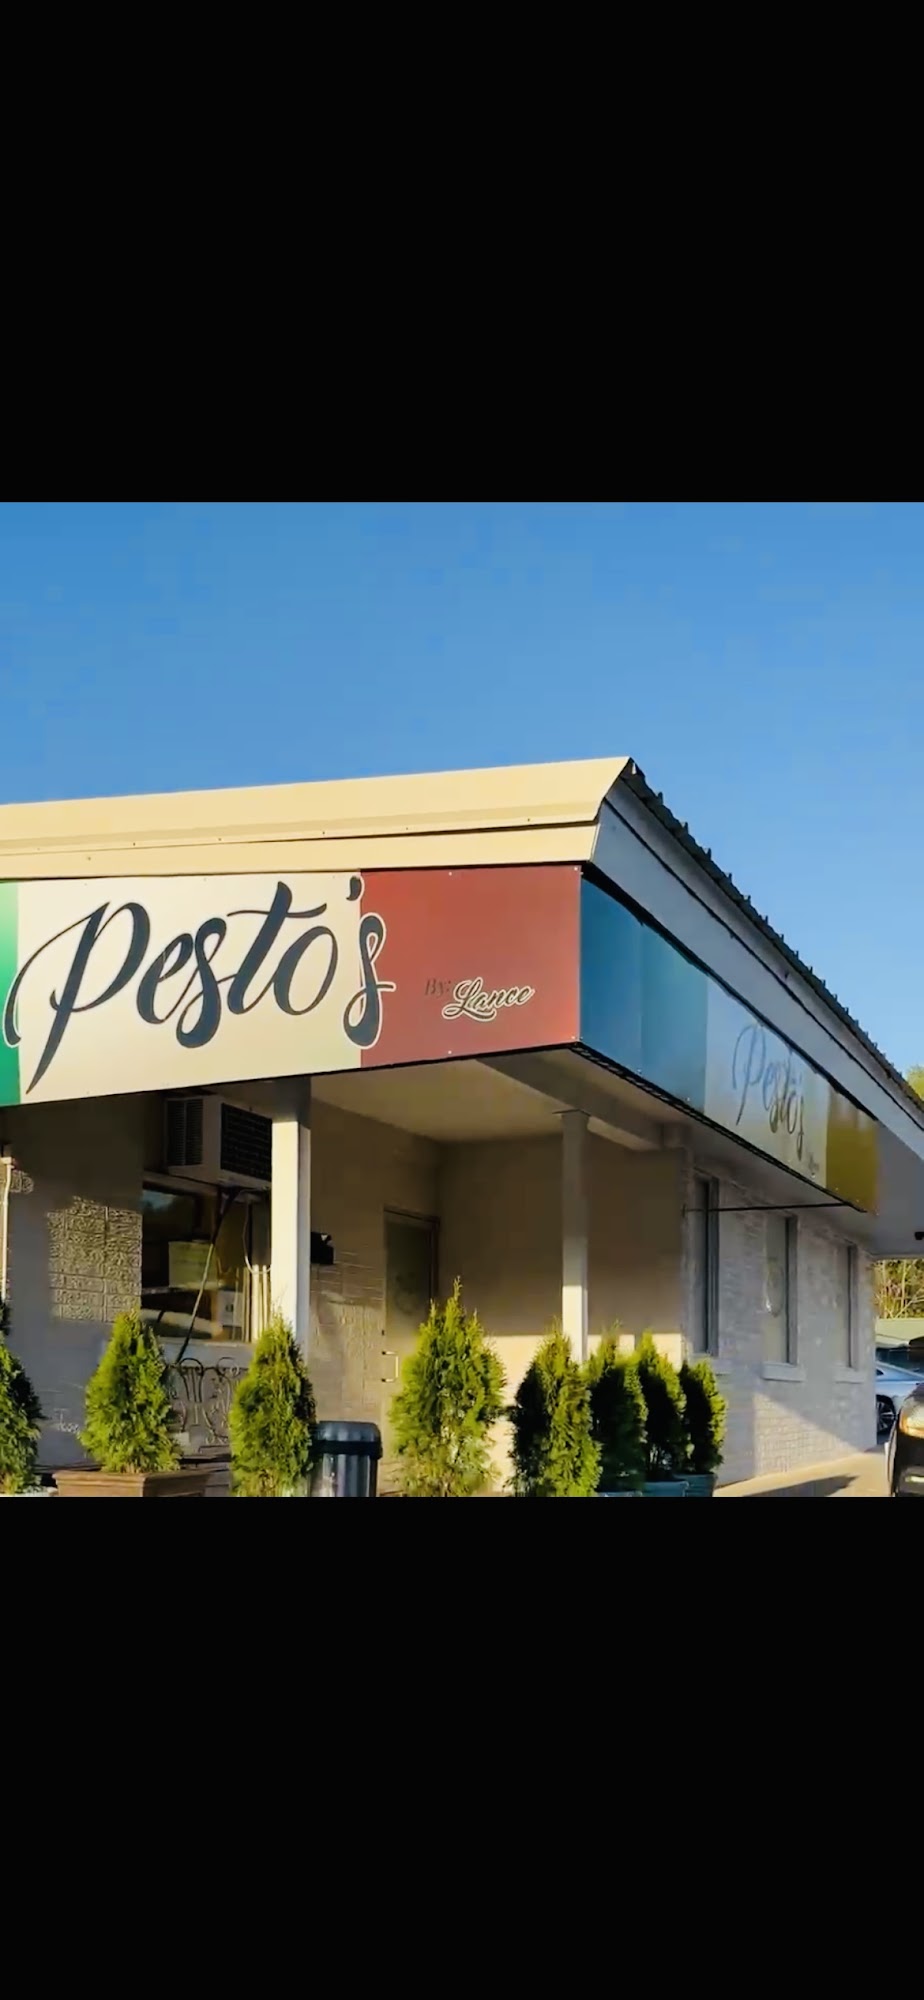 Pesto’s by Lance